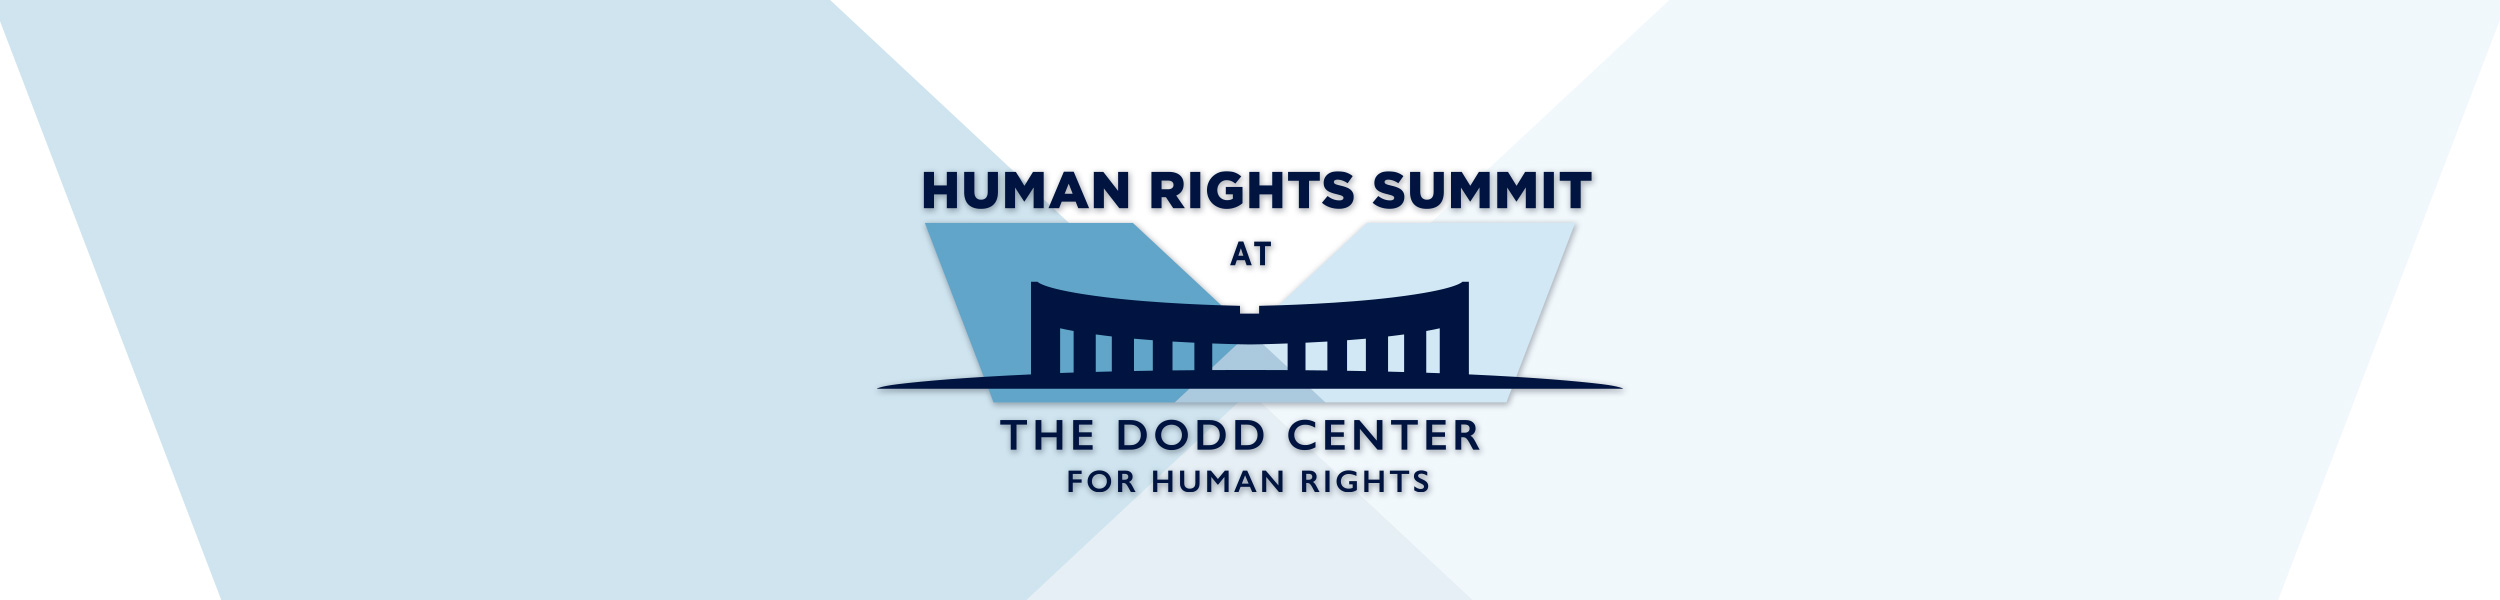 Human Rights Summit logo with illustration of Dodd Center